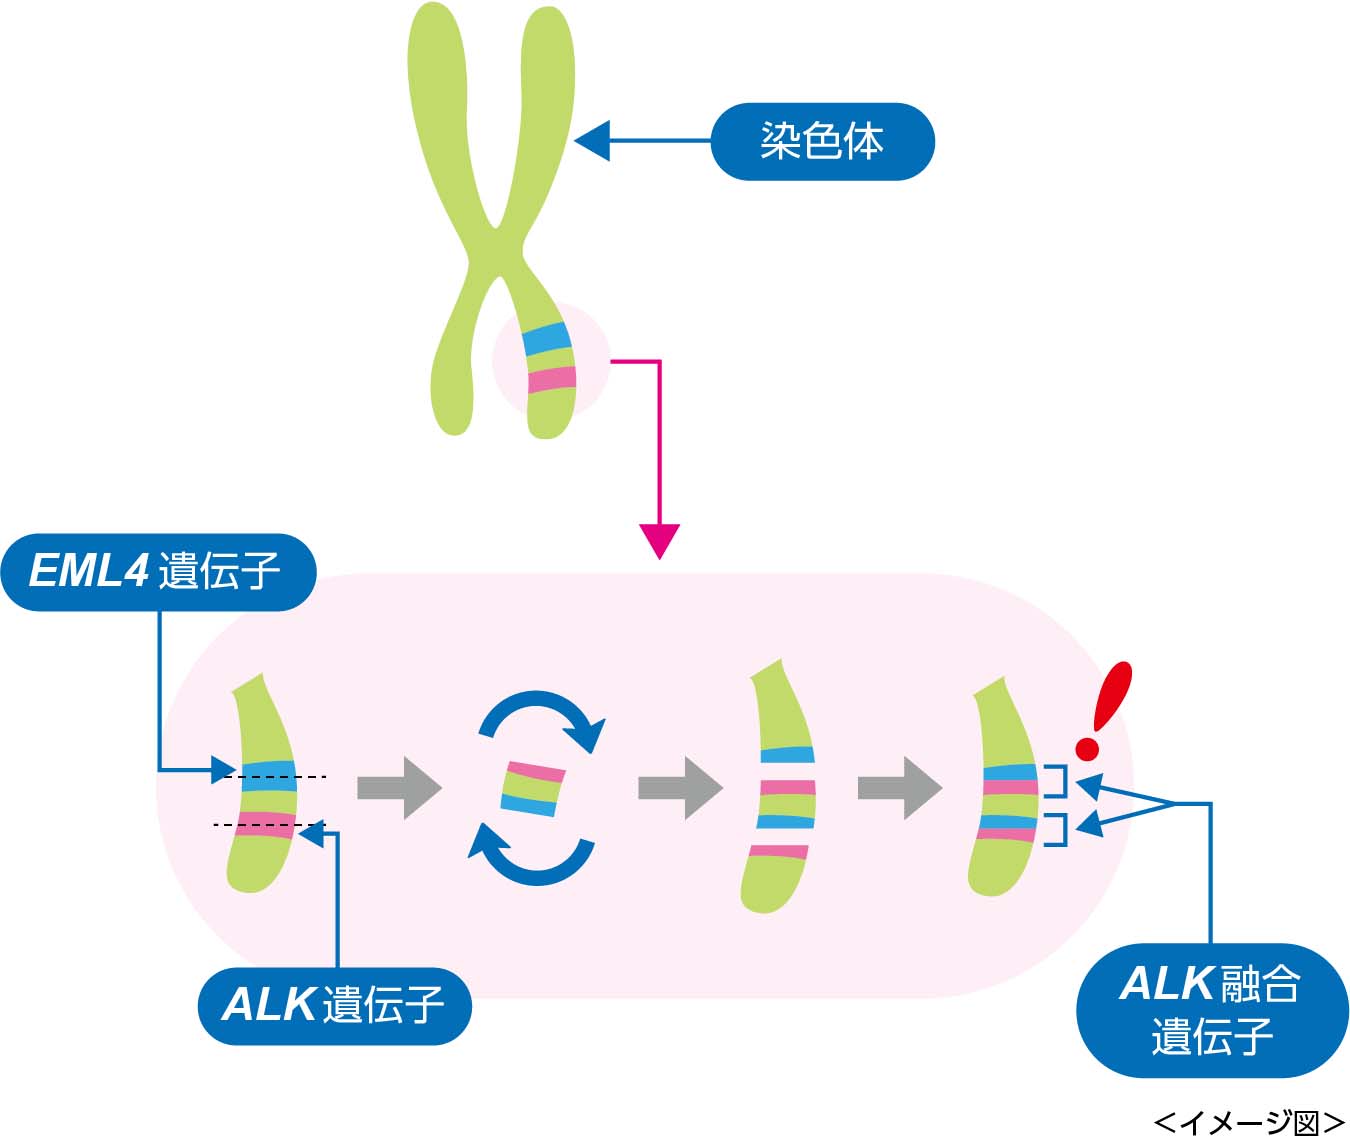 ALK遺伝子とEML4遺伝子などが融合してALK融合遺伝子が発現します。